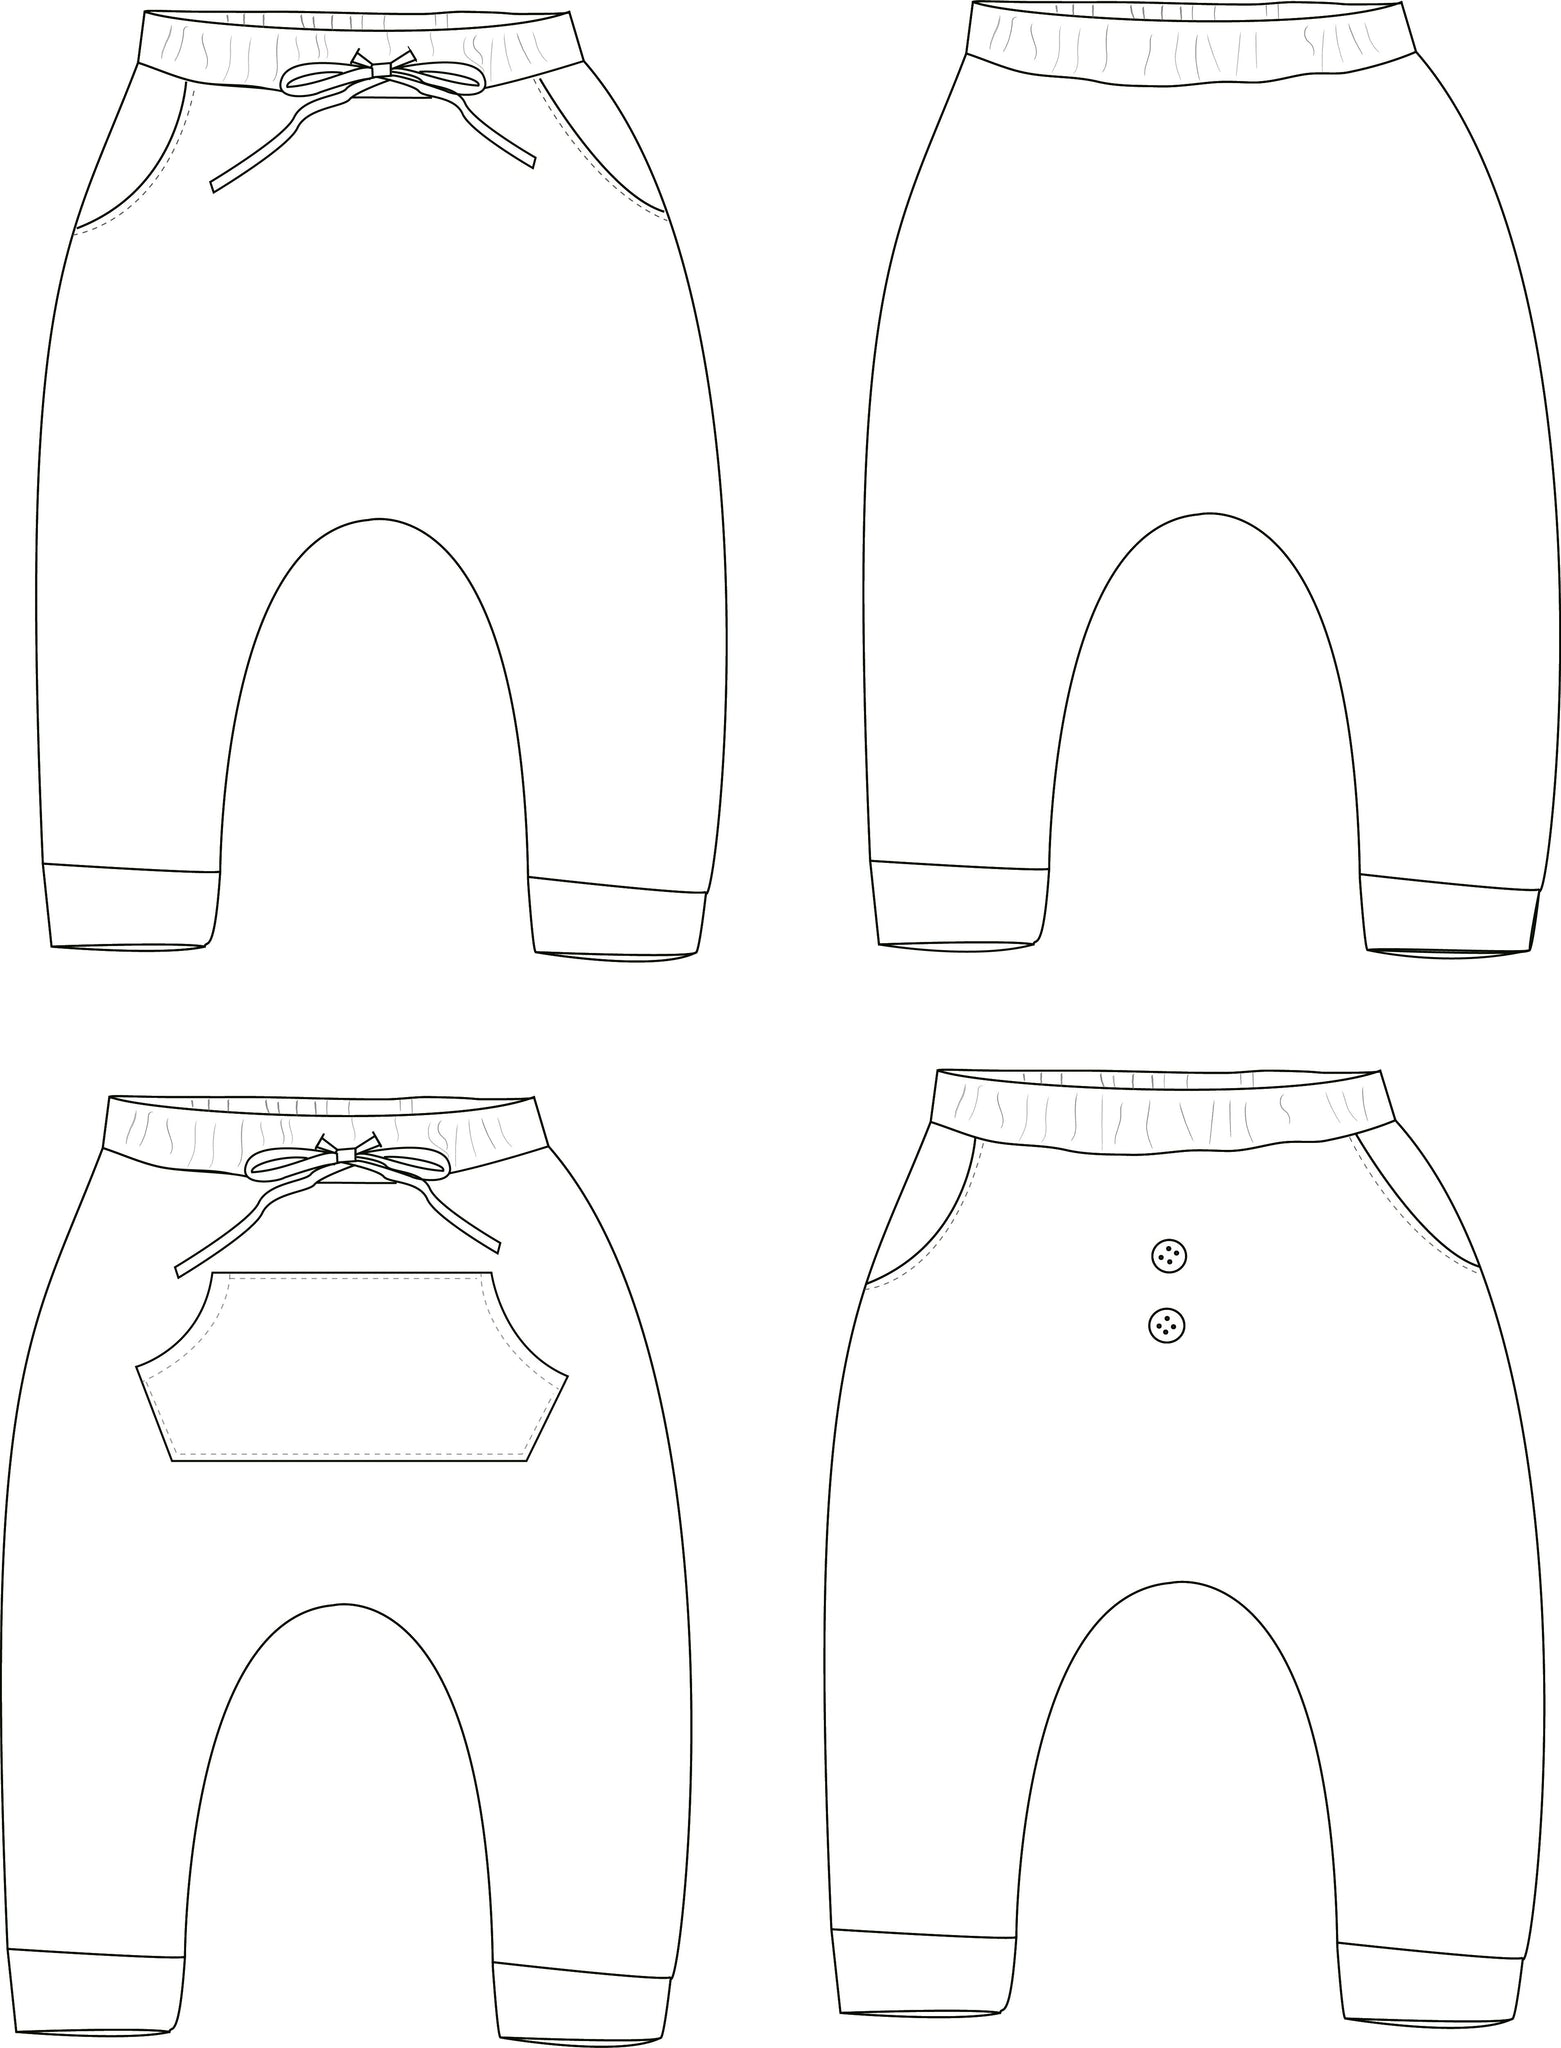 DIY Baby Pants + Free Pattern | Owlipop - YouTube